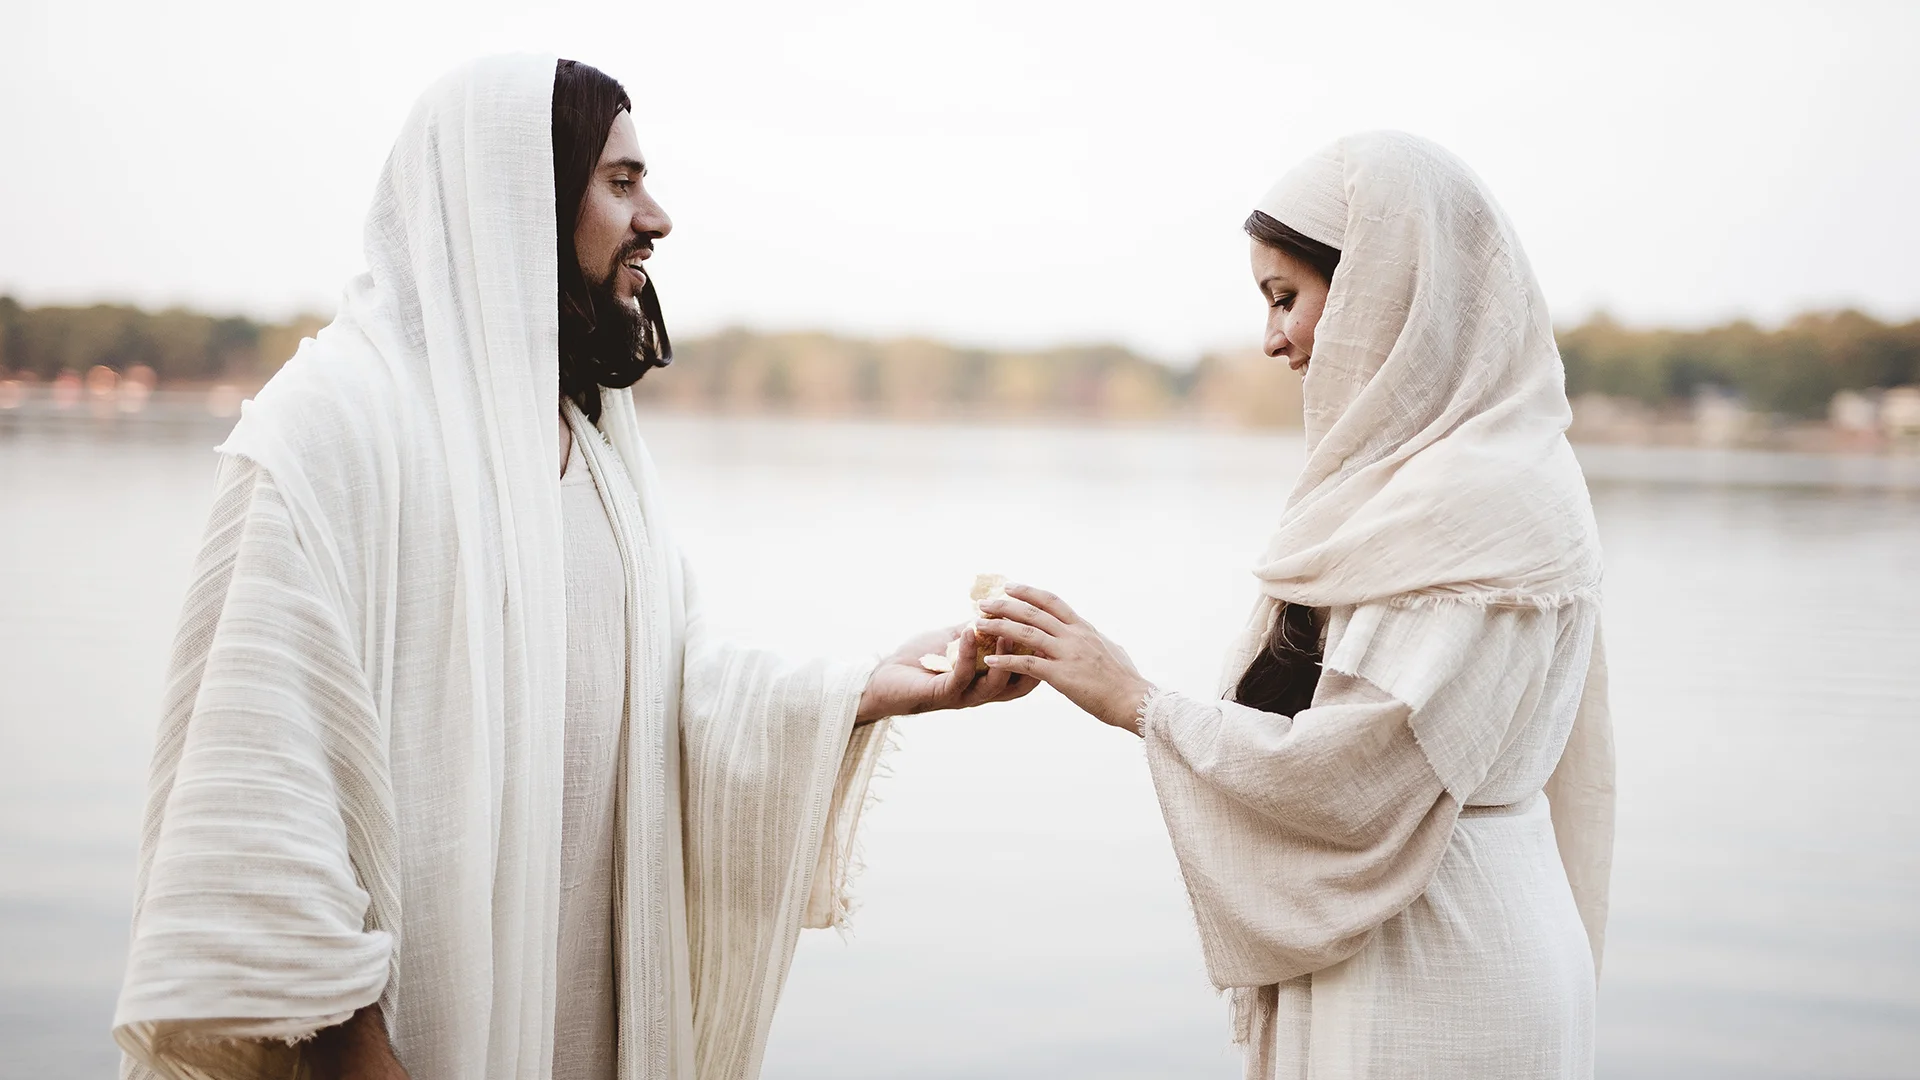 jesus-christ-giving-piece-bread-female-wearing-biblical-robe